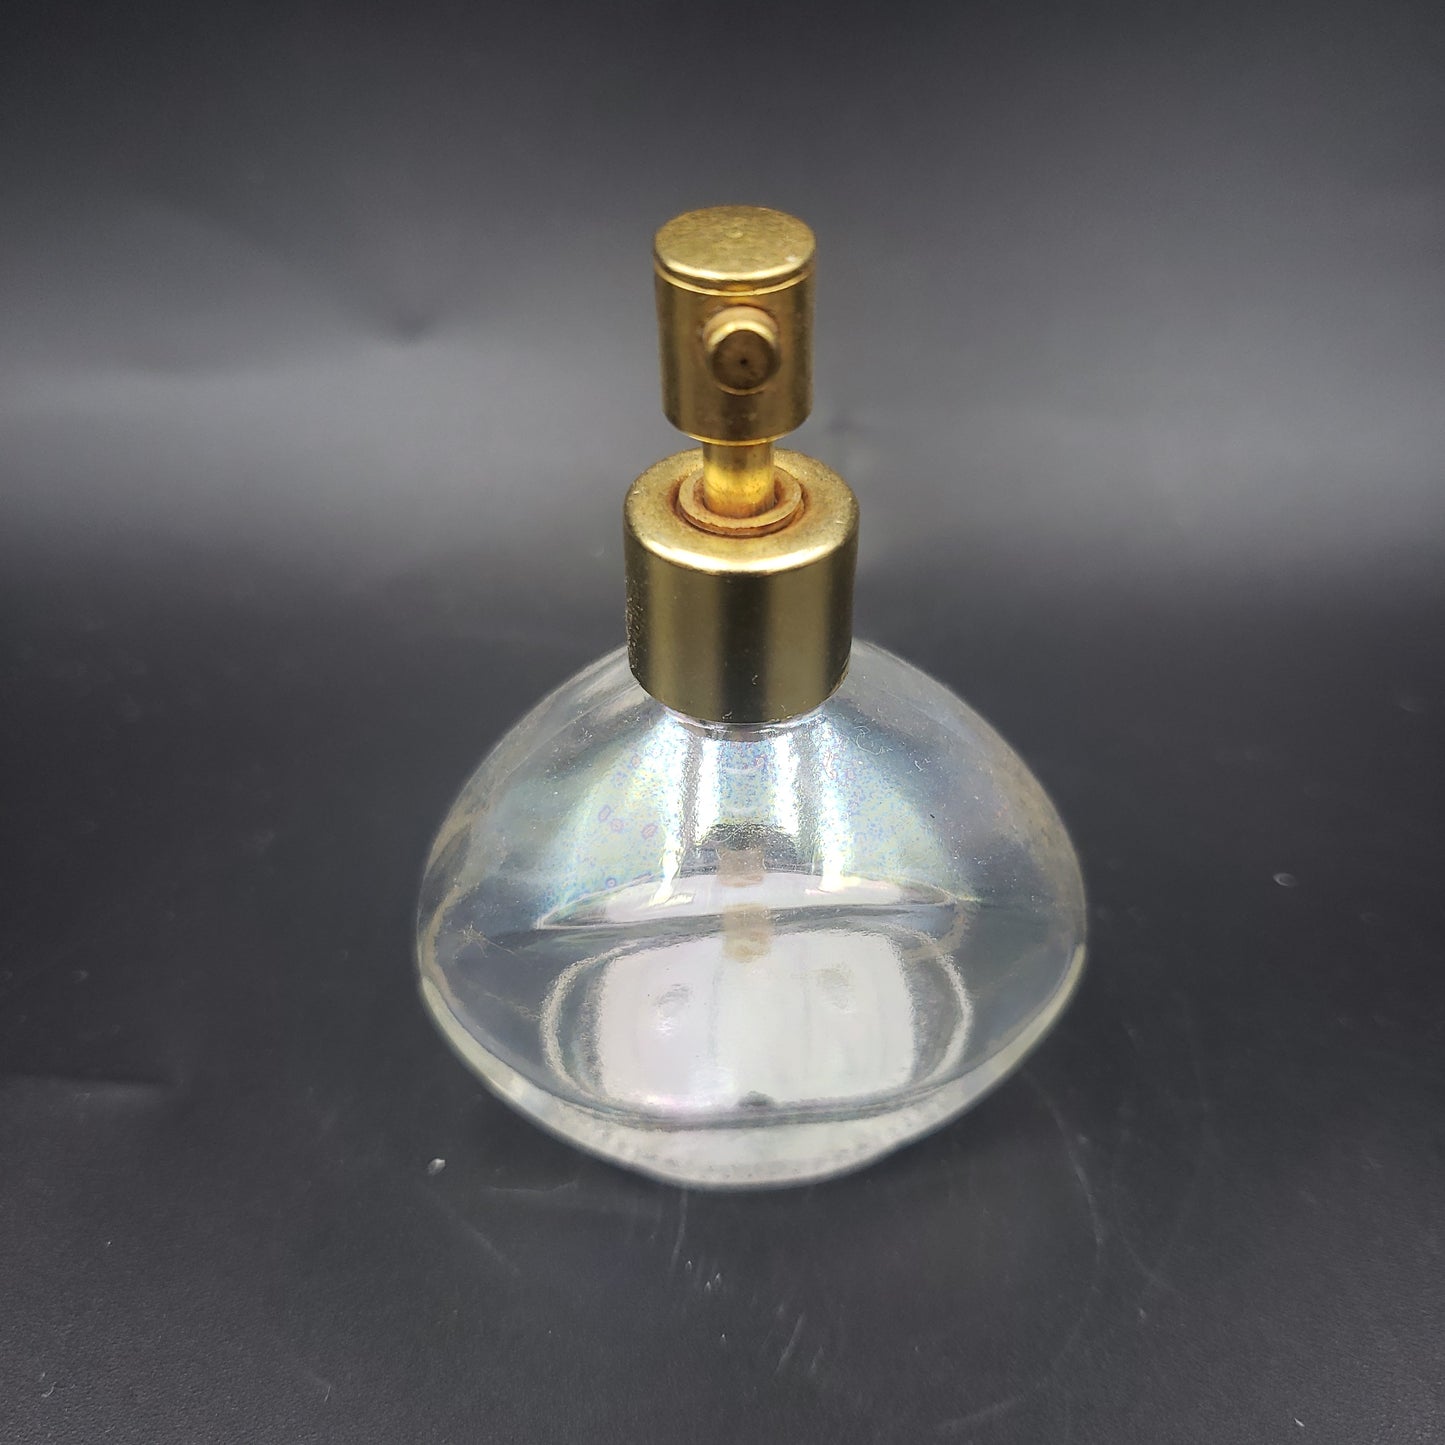 Mini perfume bottle